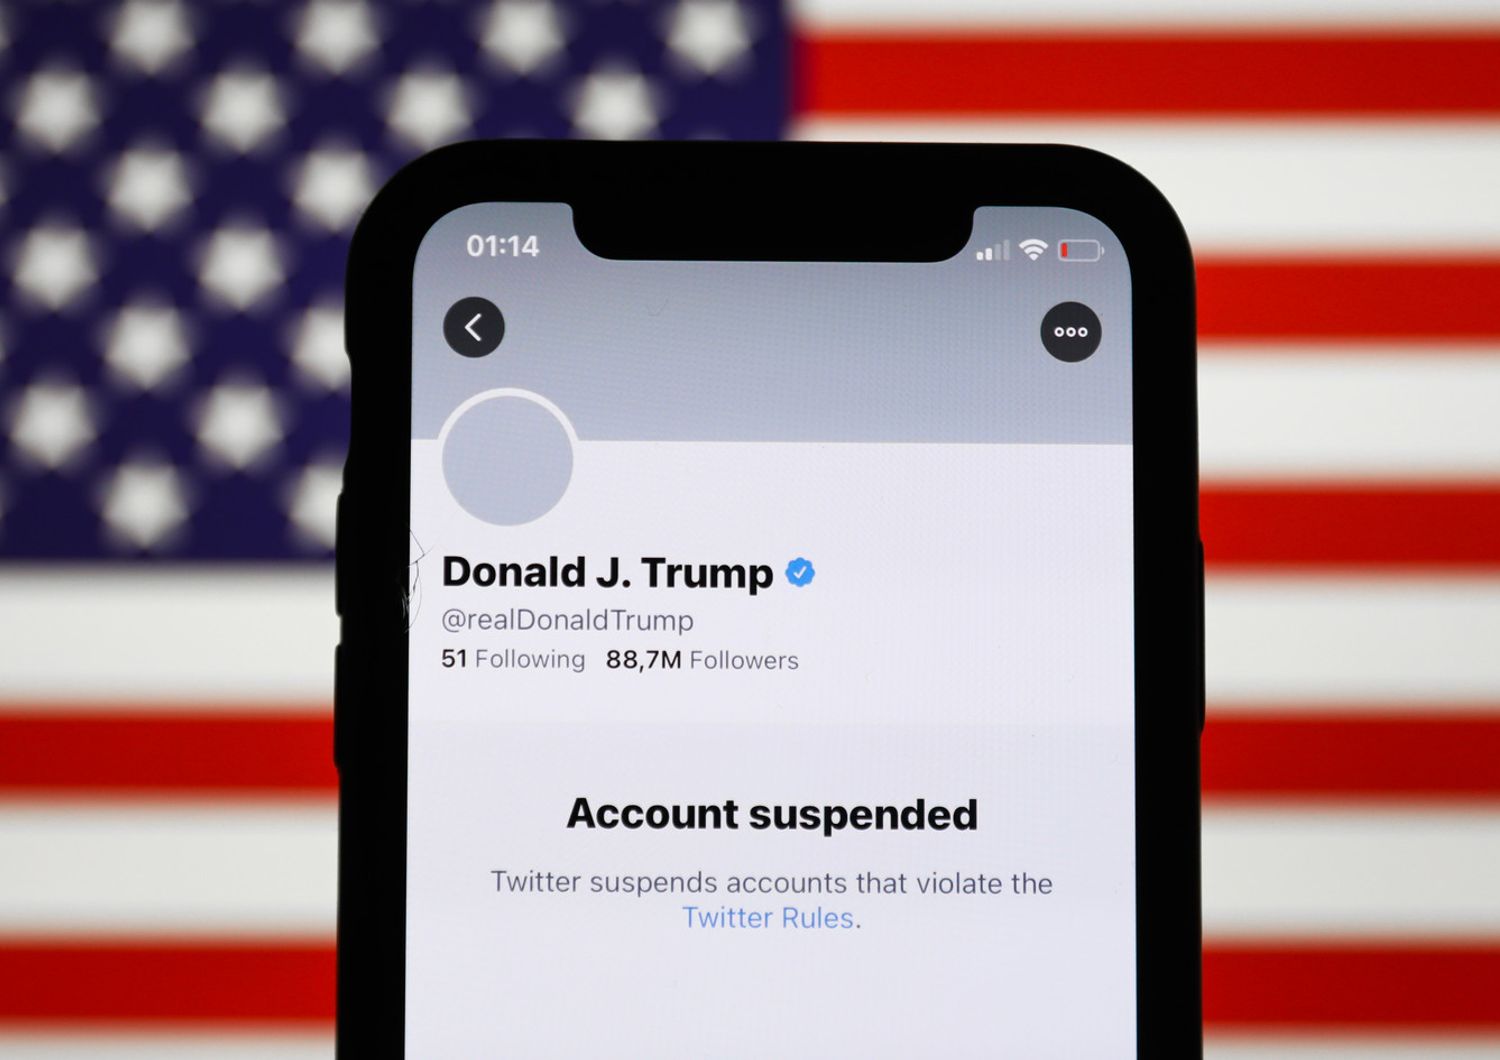 L'account Twitter di Donald Trump bloccato dal social media